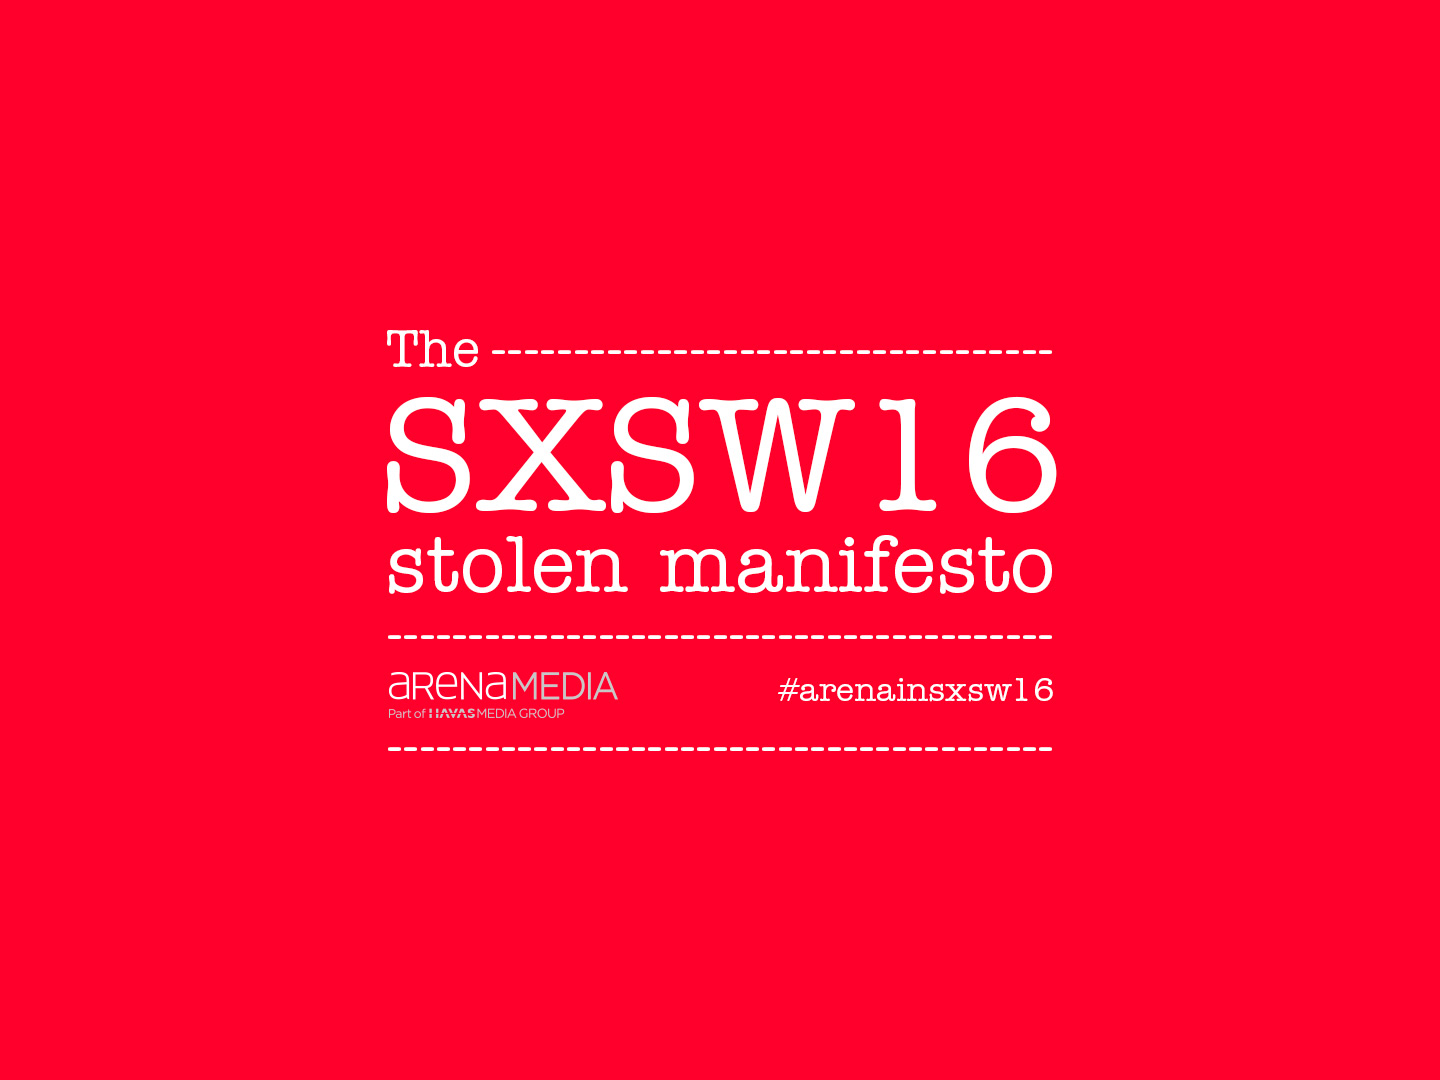 The SXSW16 Stolen Manifesto by Arena Media